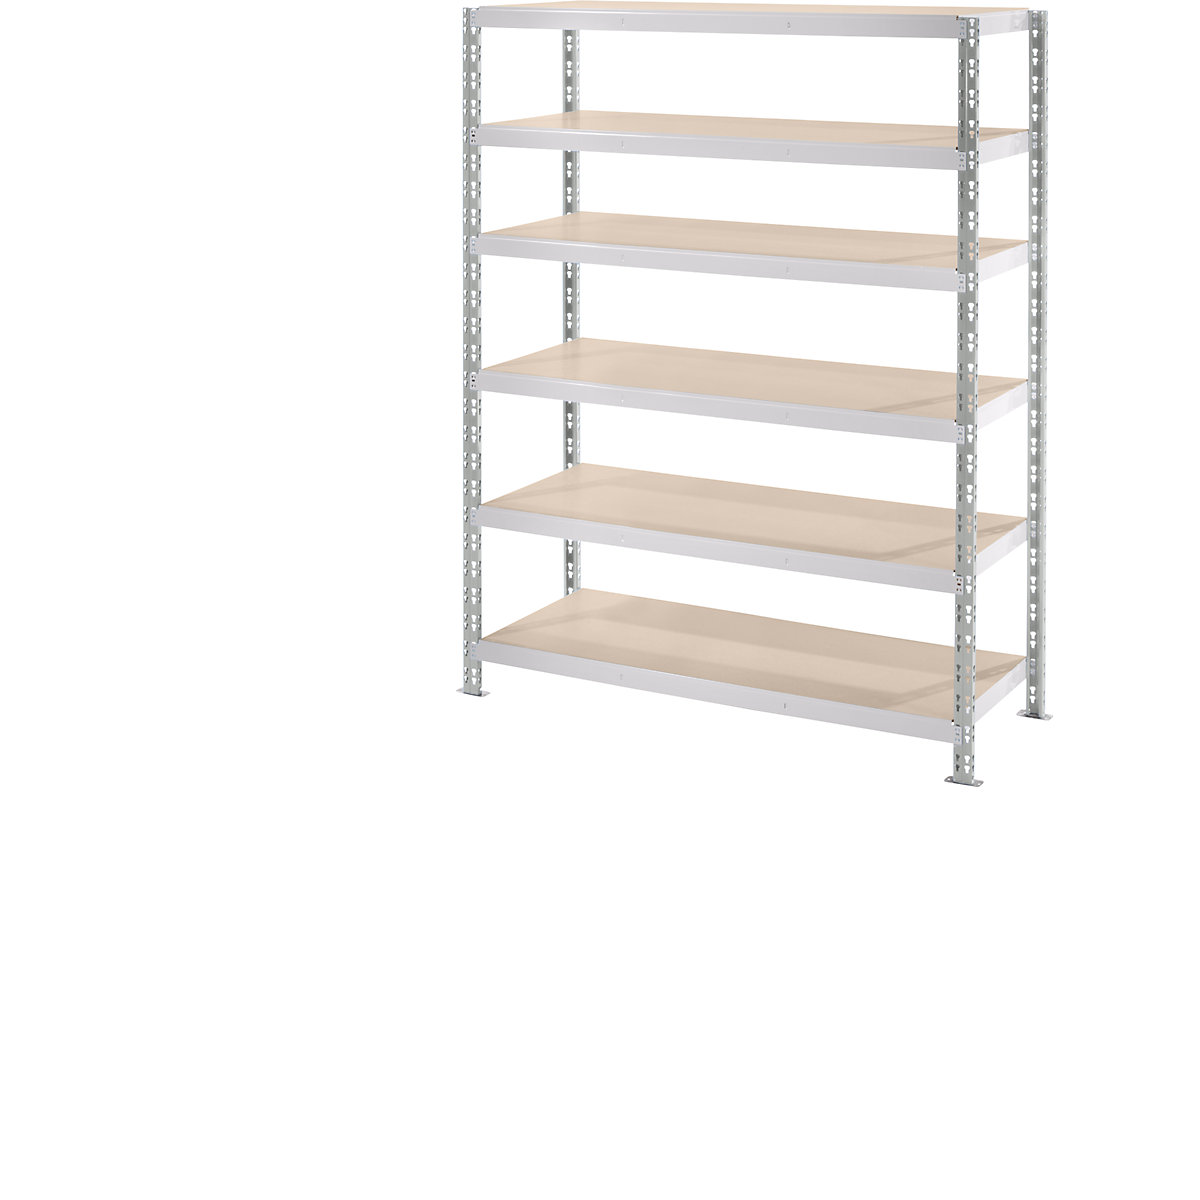 Wide span boltless shelf unit with moulded chipboard shelves, depth 700 mm, standard shelf unit, HxW 1976 x 1550 mm